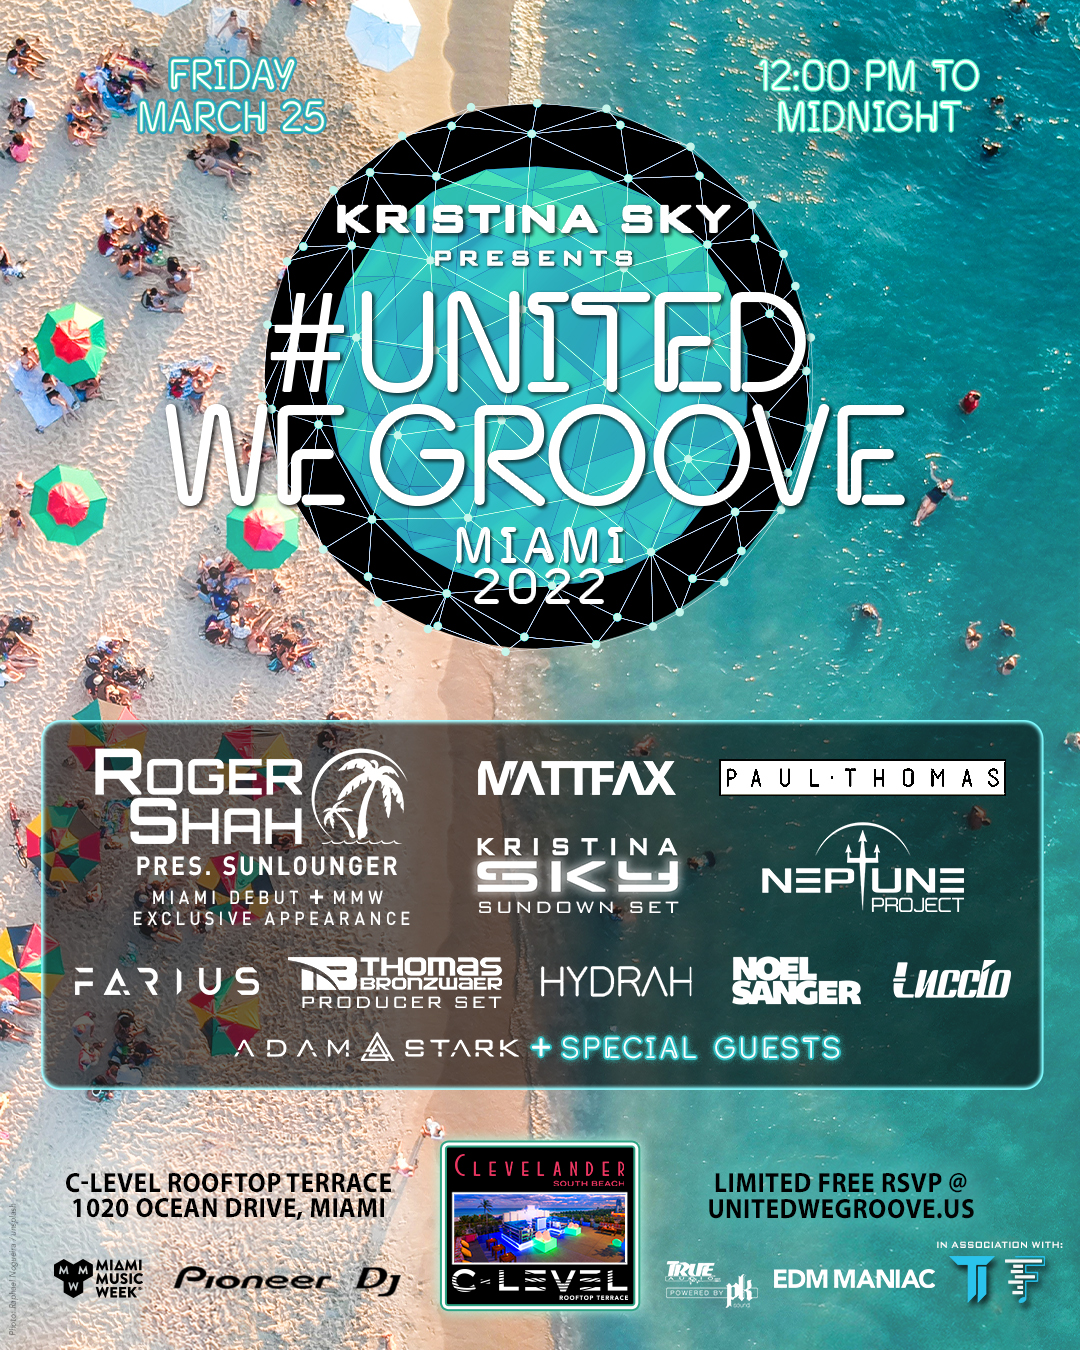 Kristina Sky presents United We Groove Miami 2022 Image